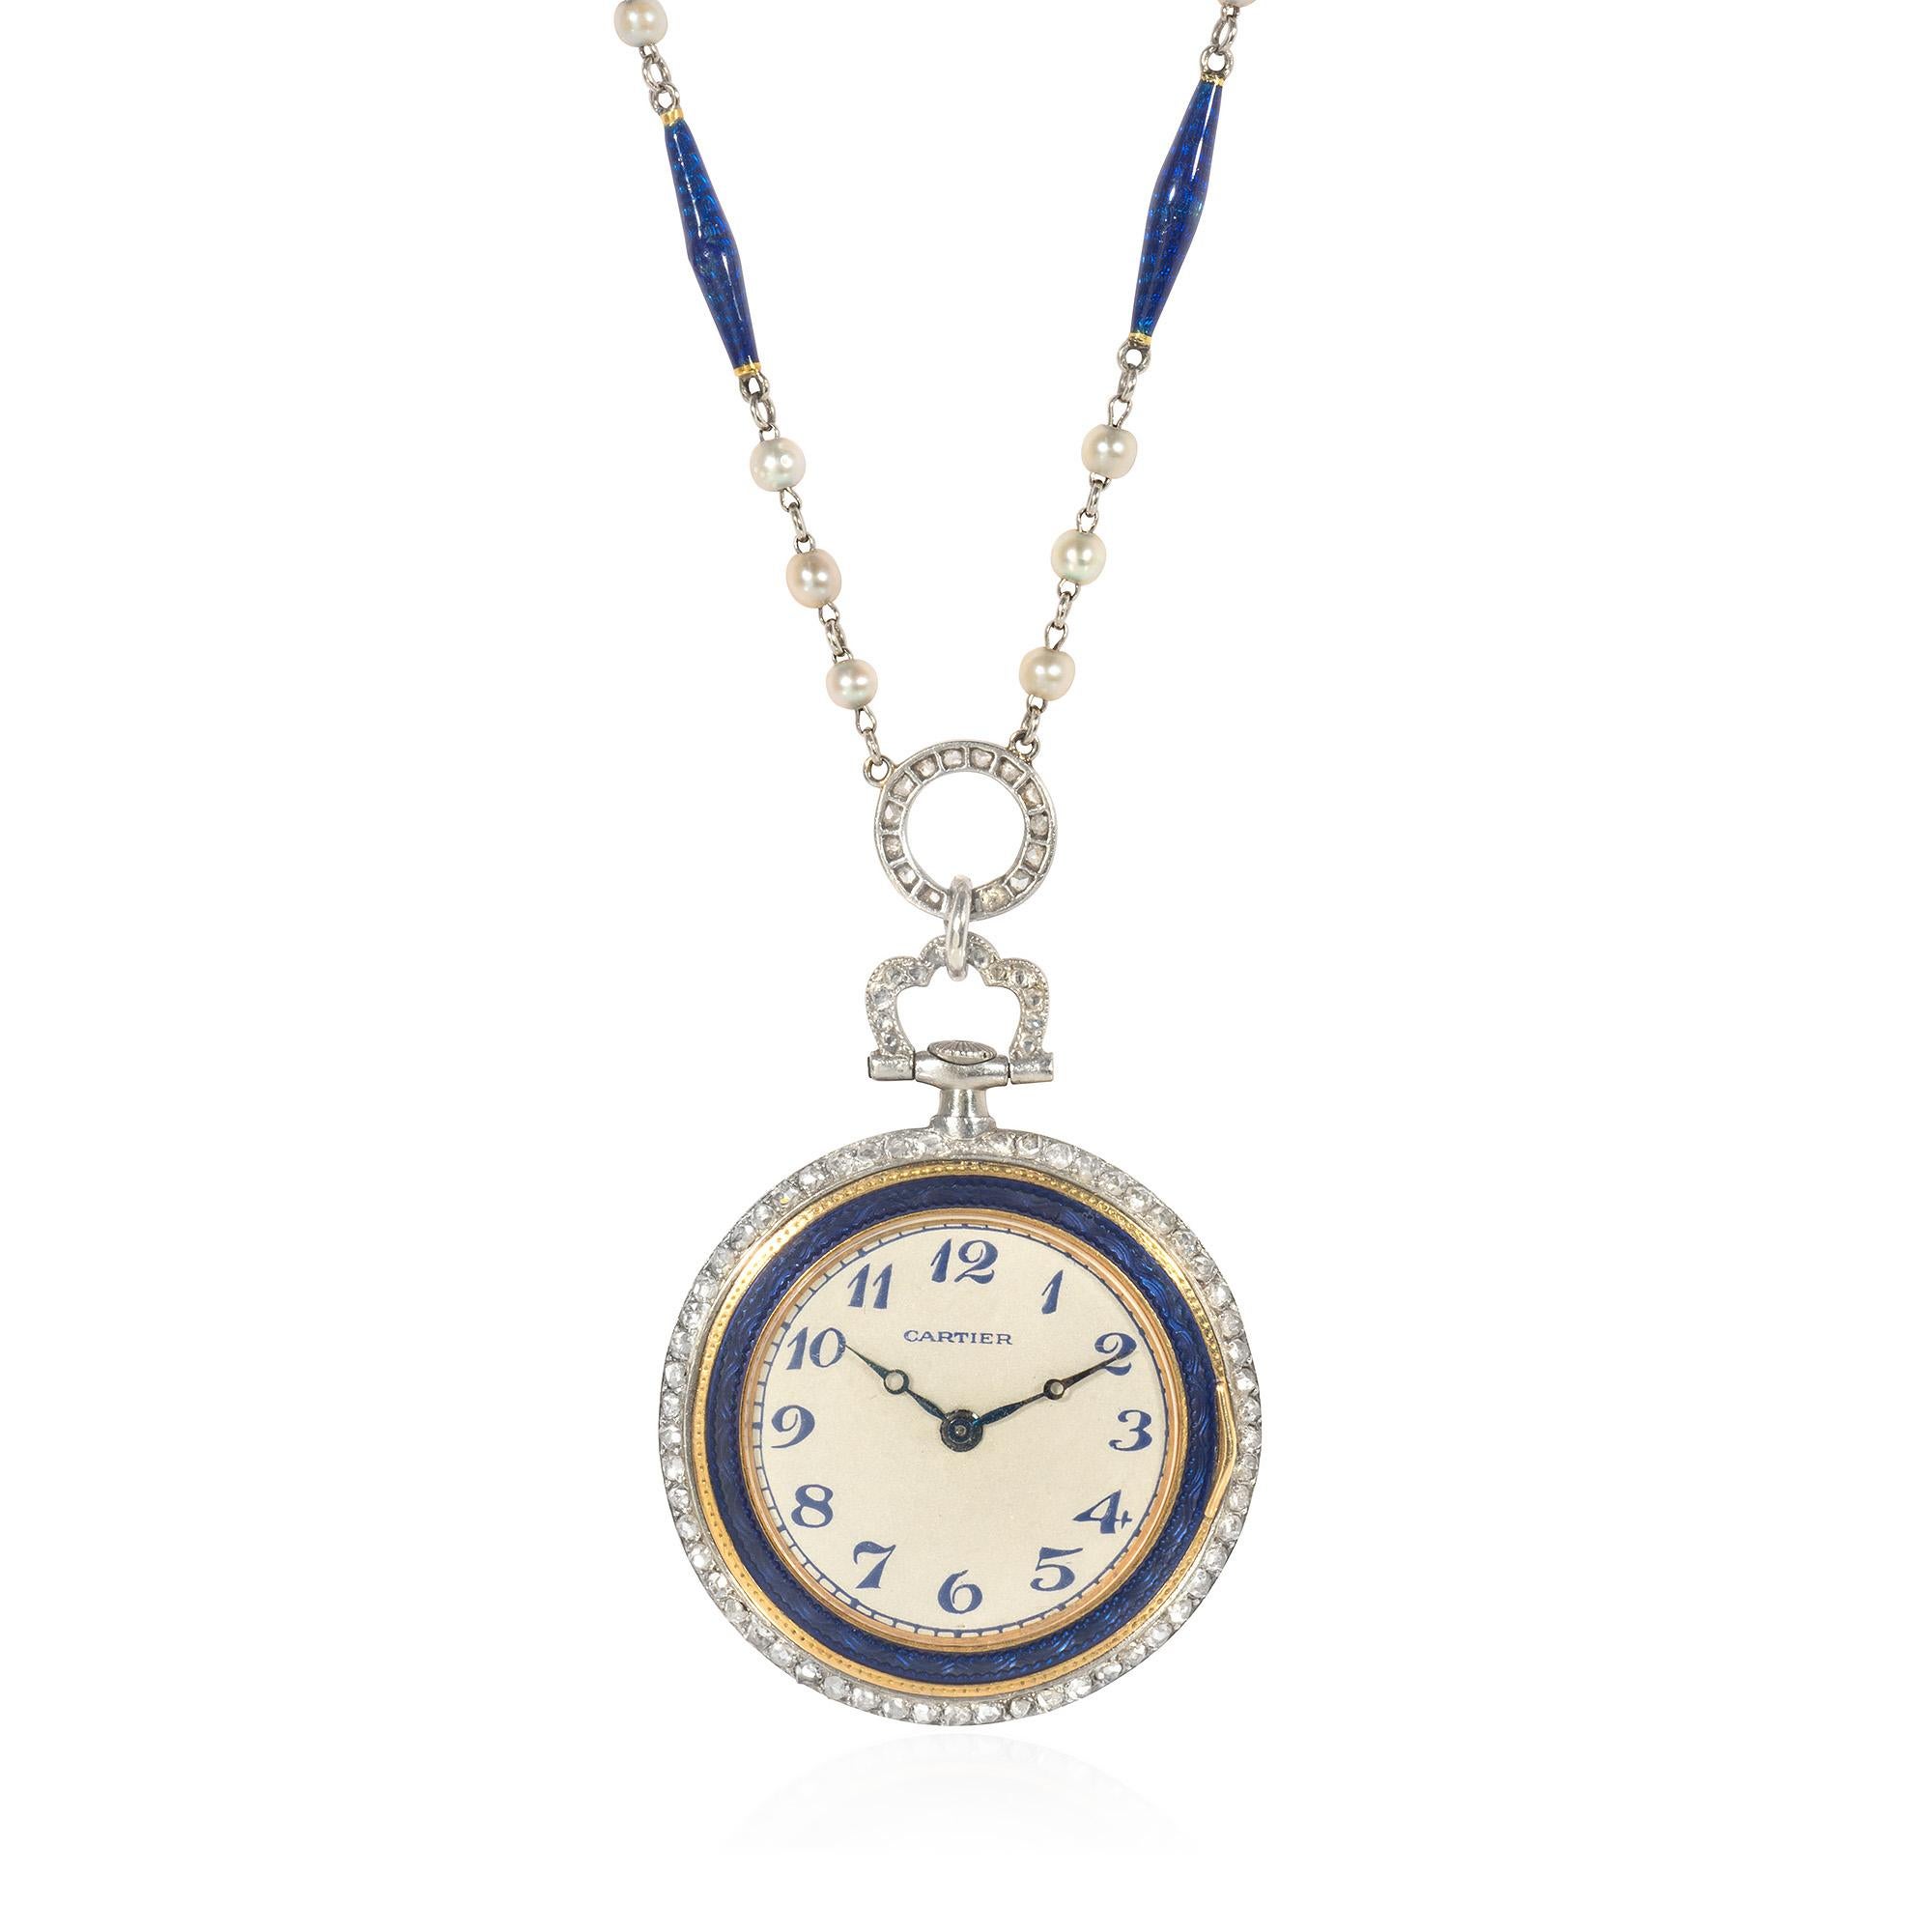 Rose Cut Cartier Belle Epoque Blue Enamel, Diamond, and Pearl Pendant Watch on Chain